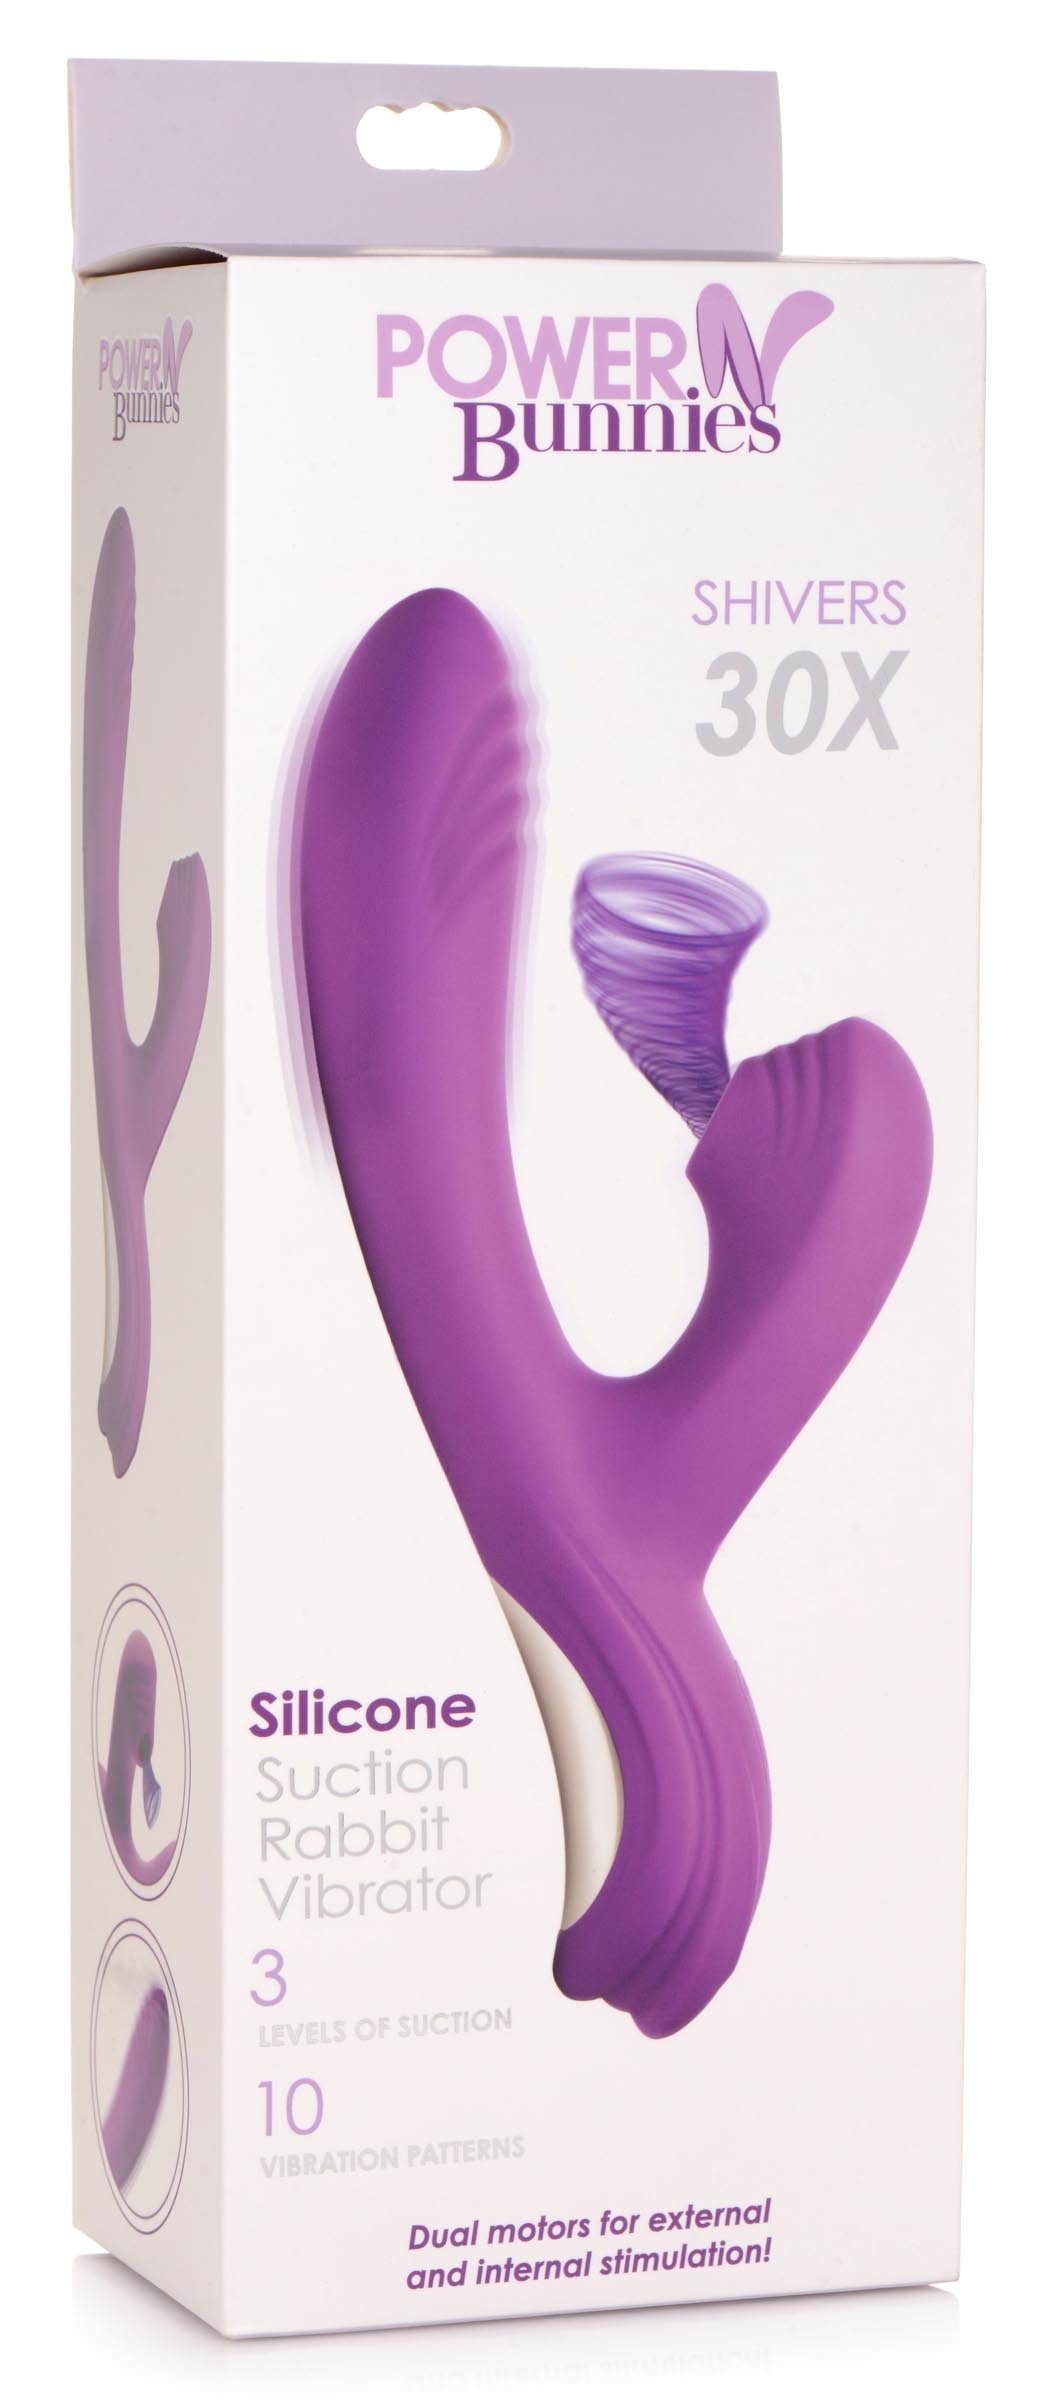 Shivers 30X Silicone Suction Rabbit Vibrator